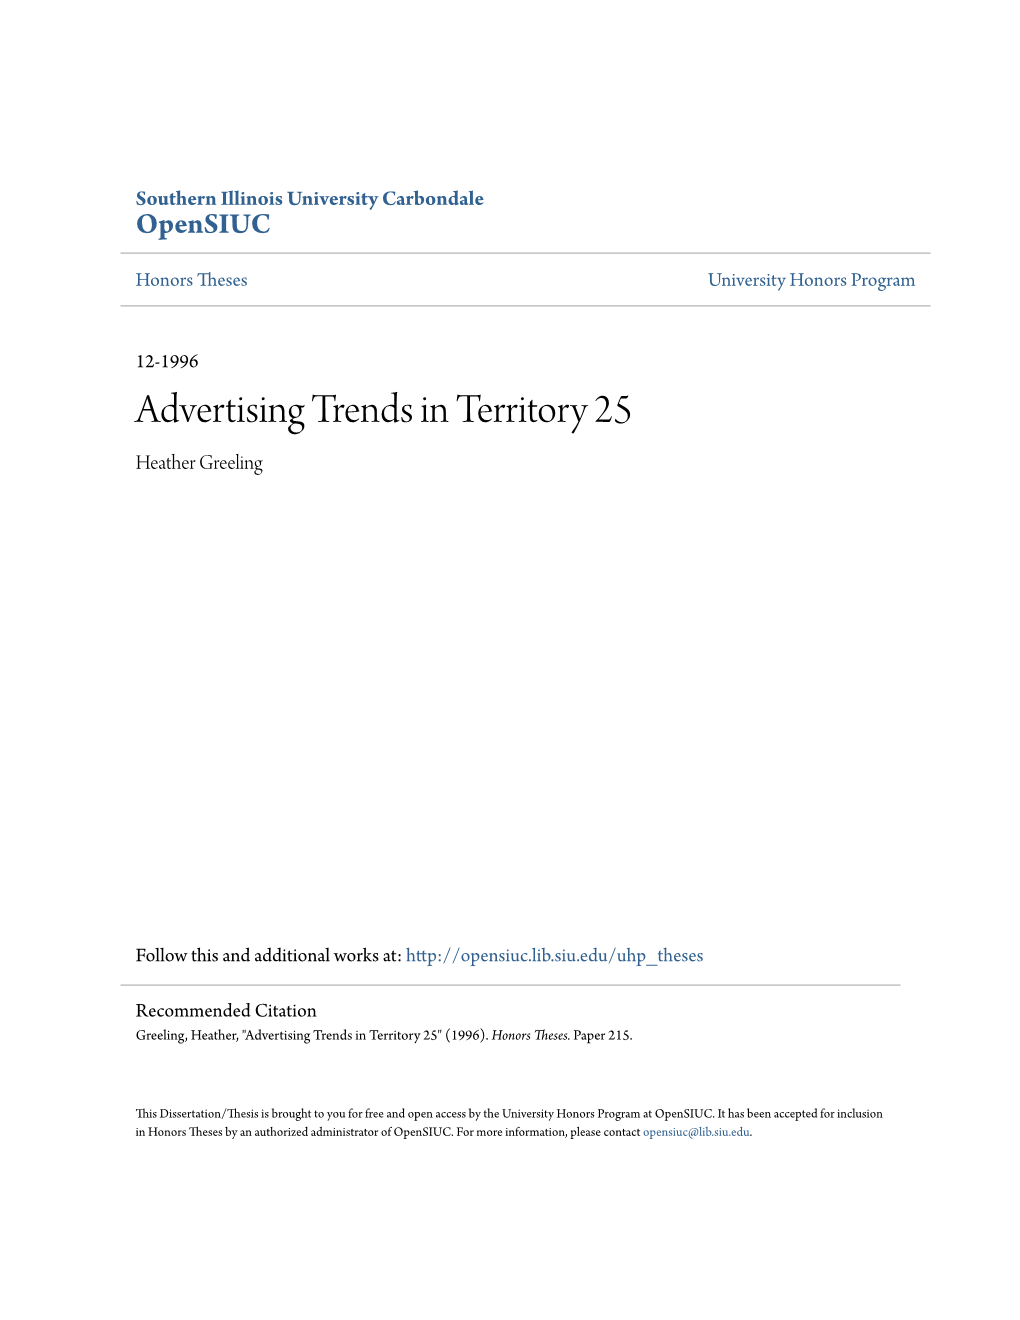 Advertising Trends in Territory 25 Heather Greeling